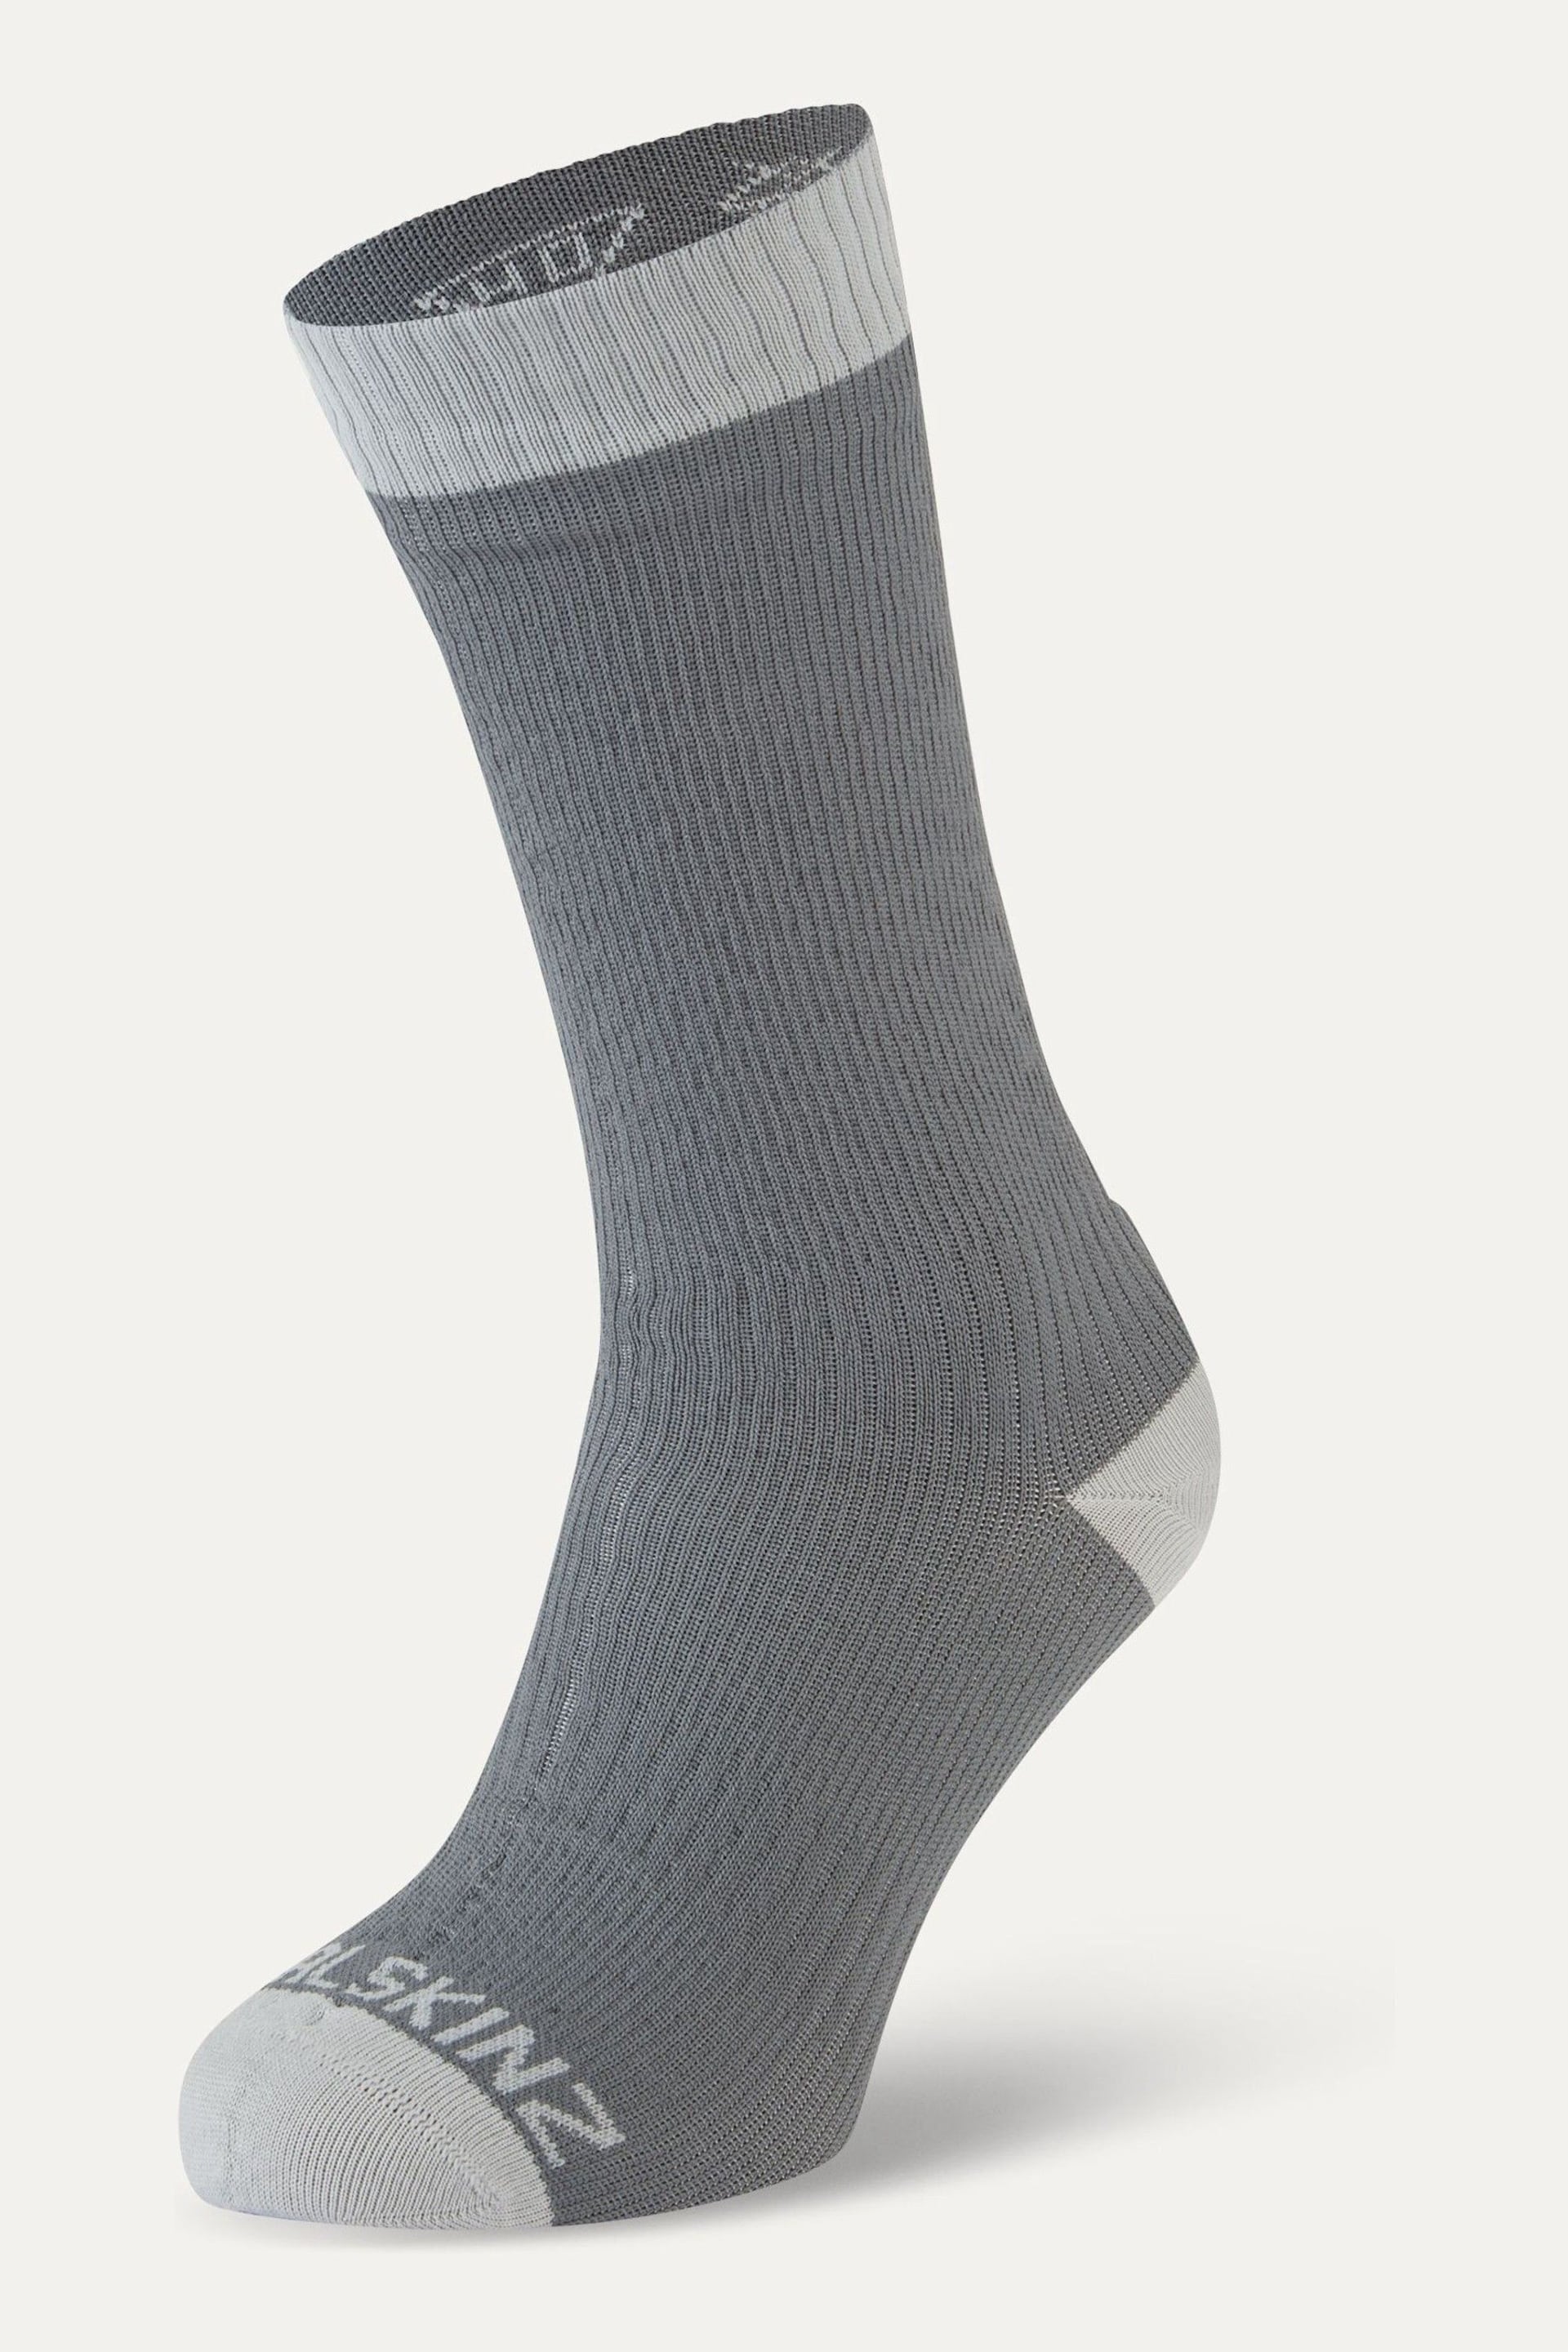 Sealskinz Wiveton Waterproof Warm Weather Mid Length Black Socks - Image 1 of 2